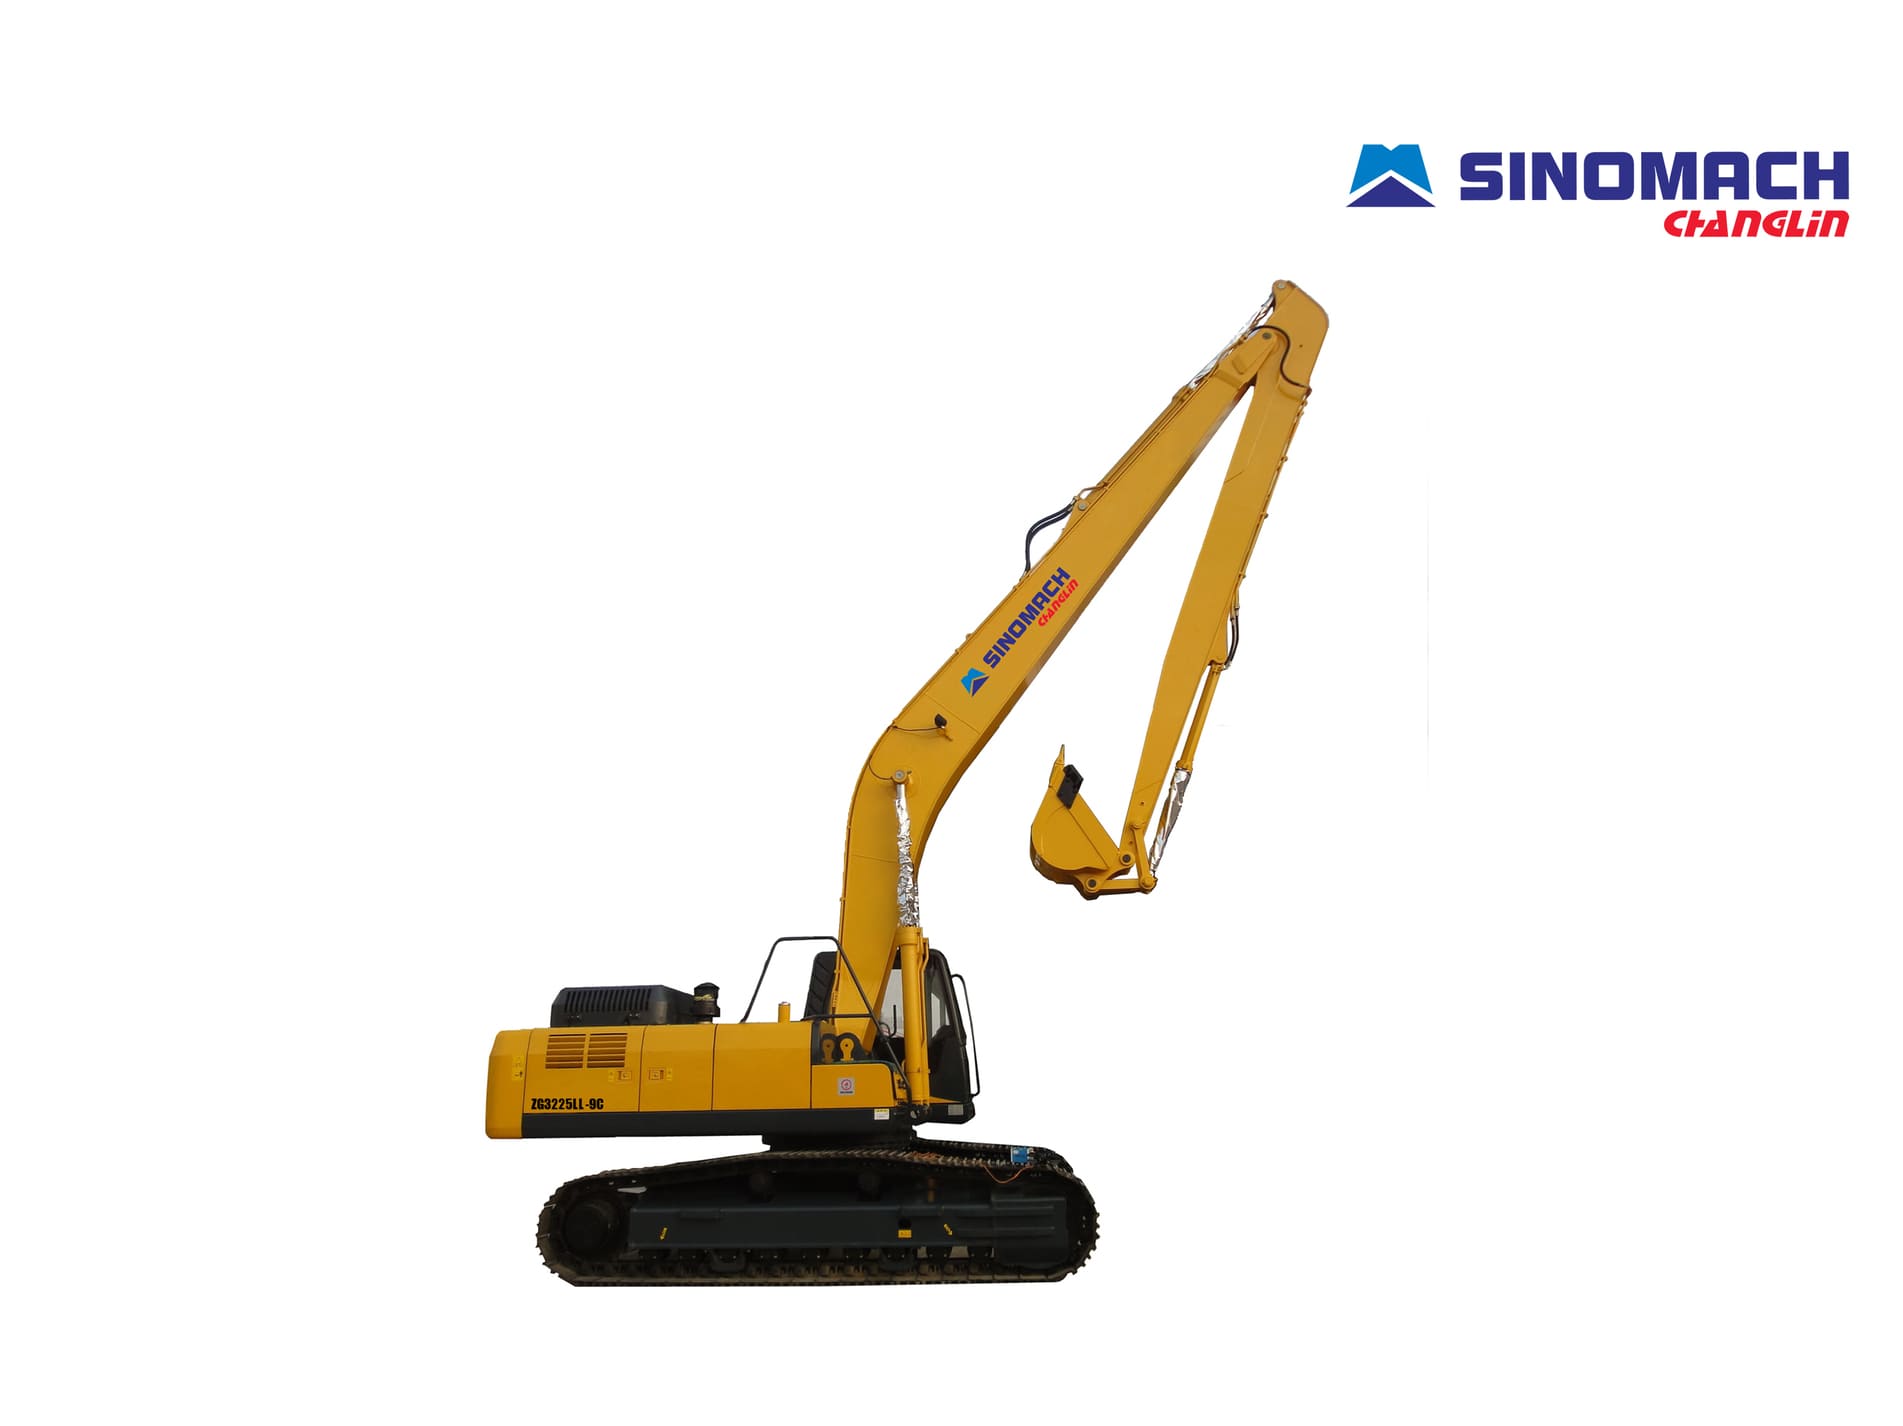 Excavator Sinimach Changlin Longarm Zg3225ll 9c Sm